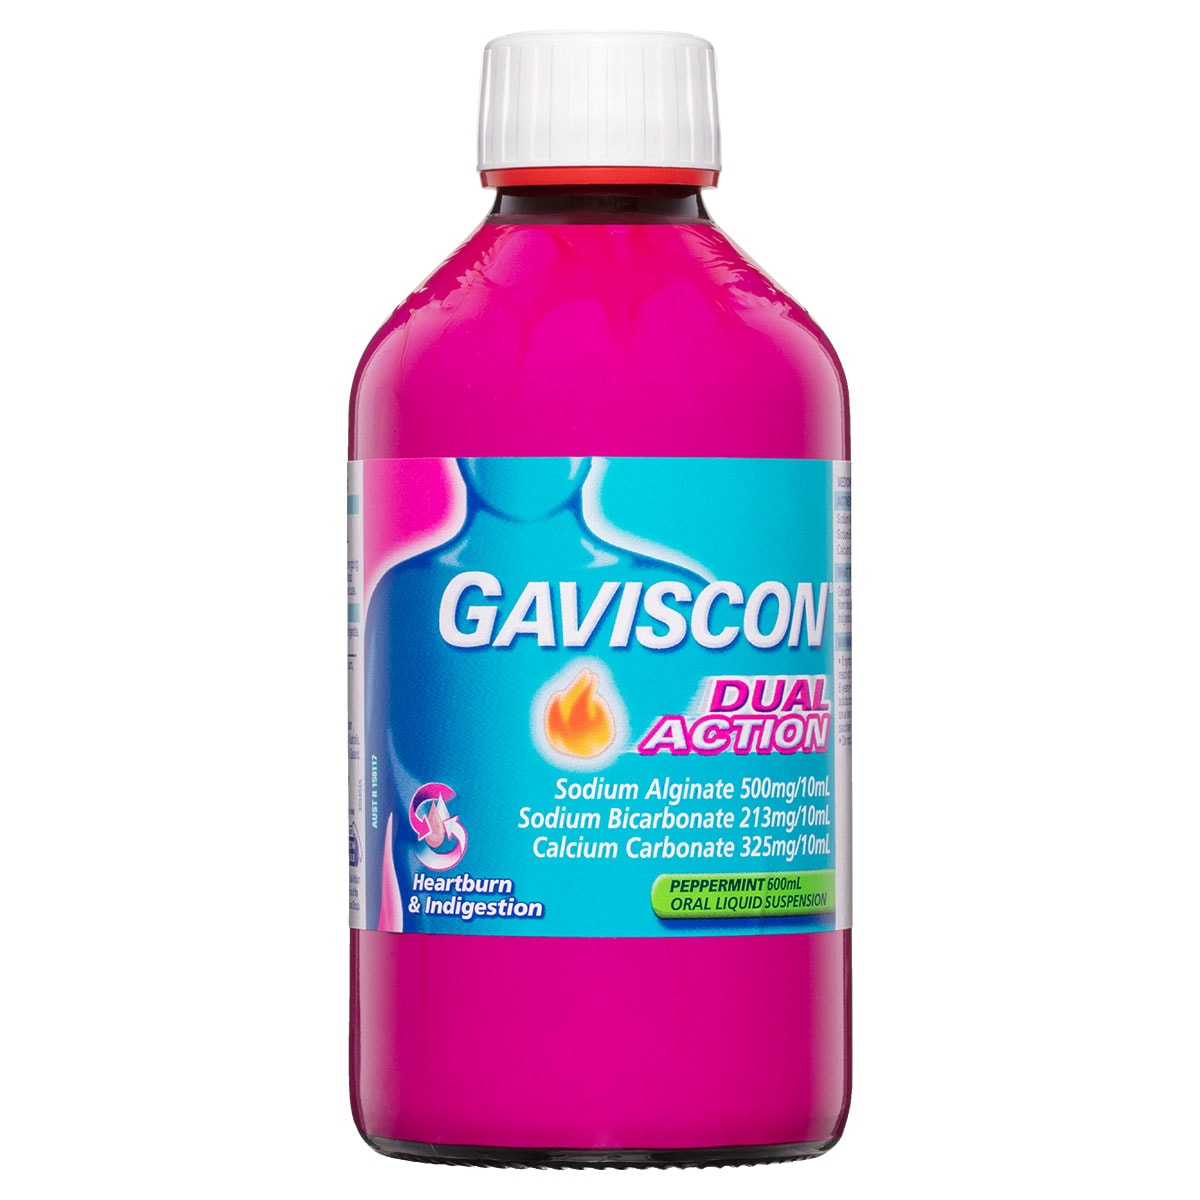 Gaviscon Dual Action Heartburn & Indigestion Peppermint 600ml